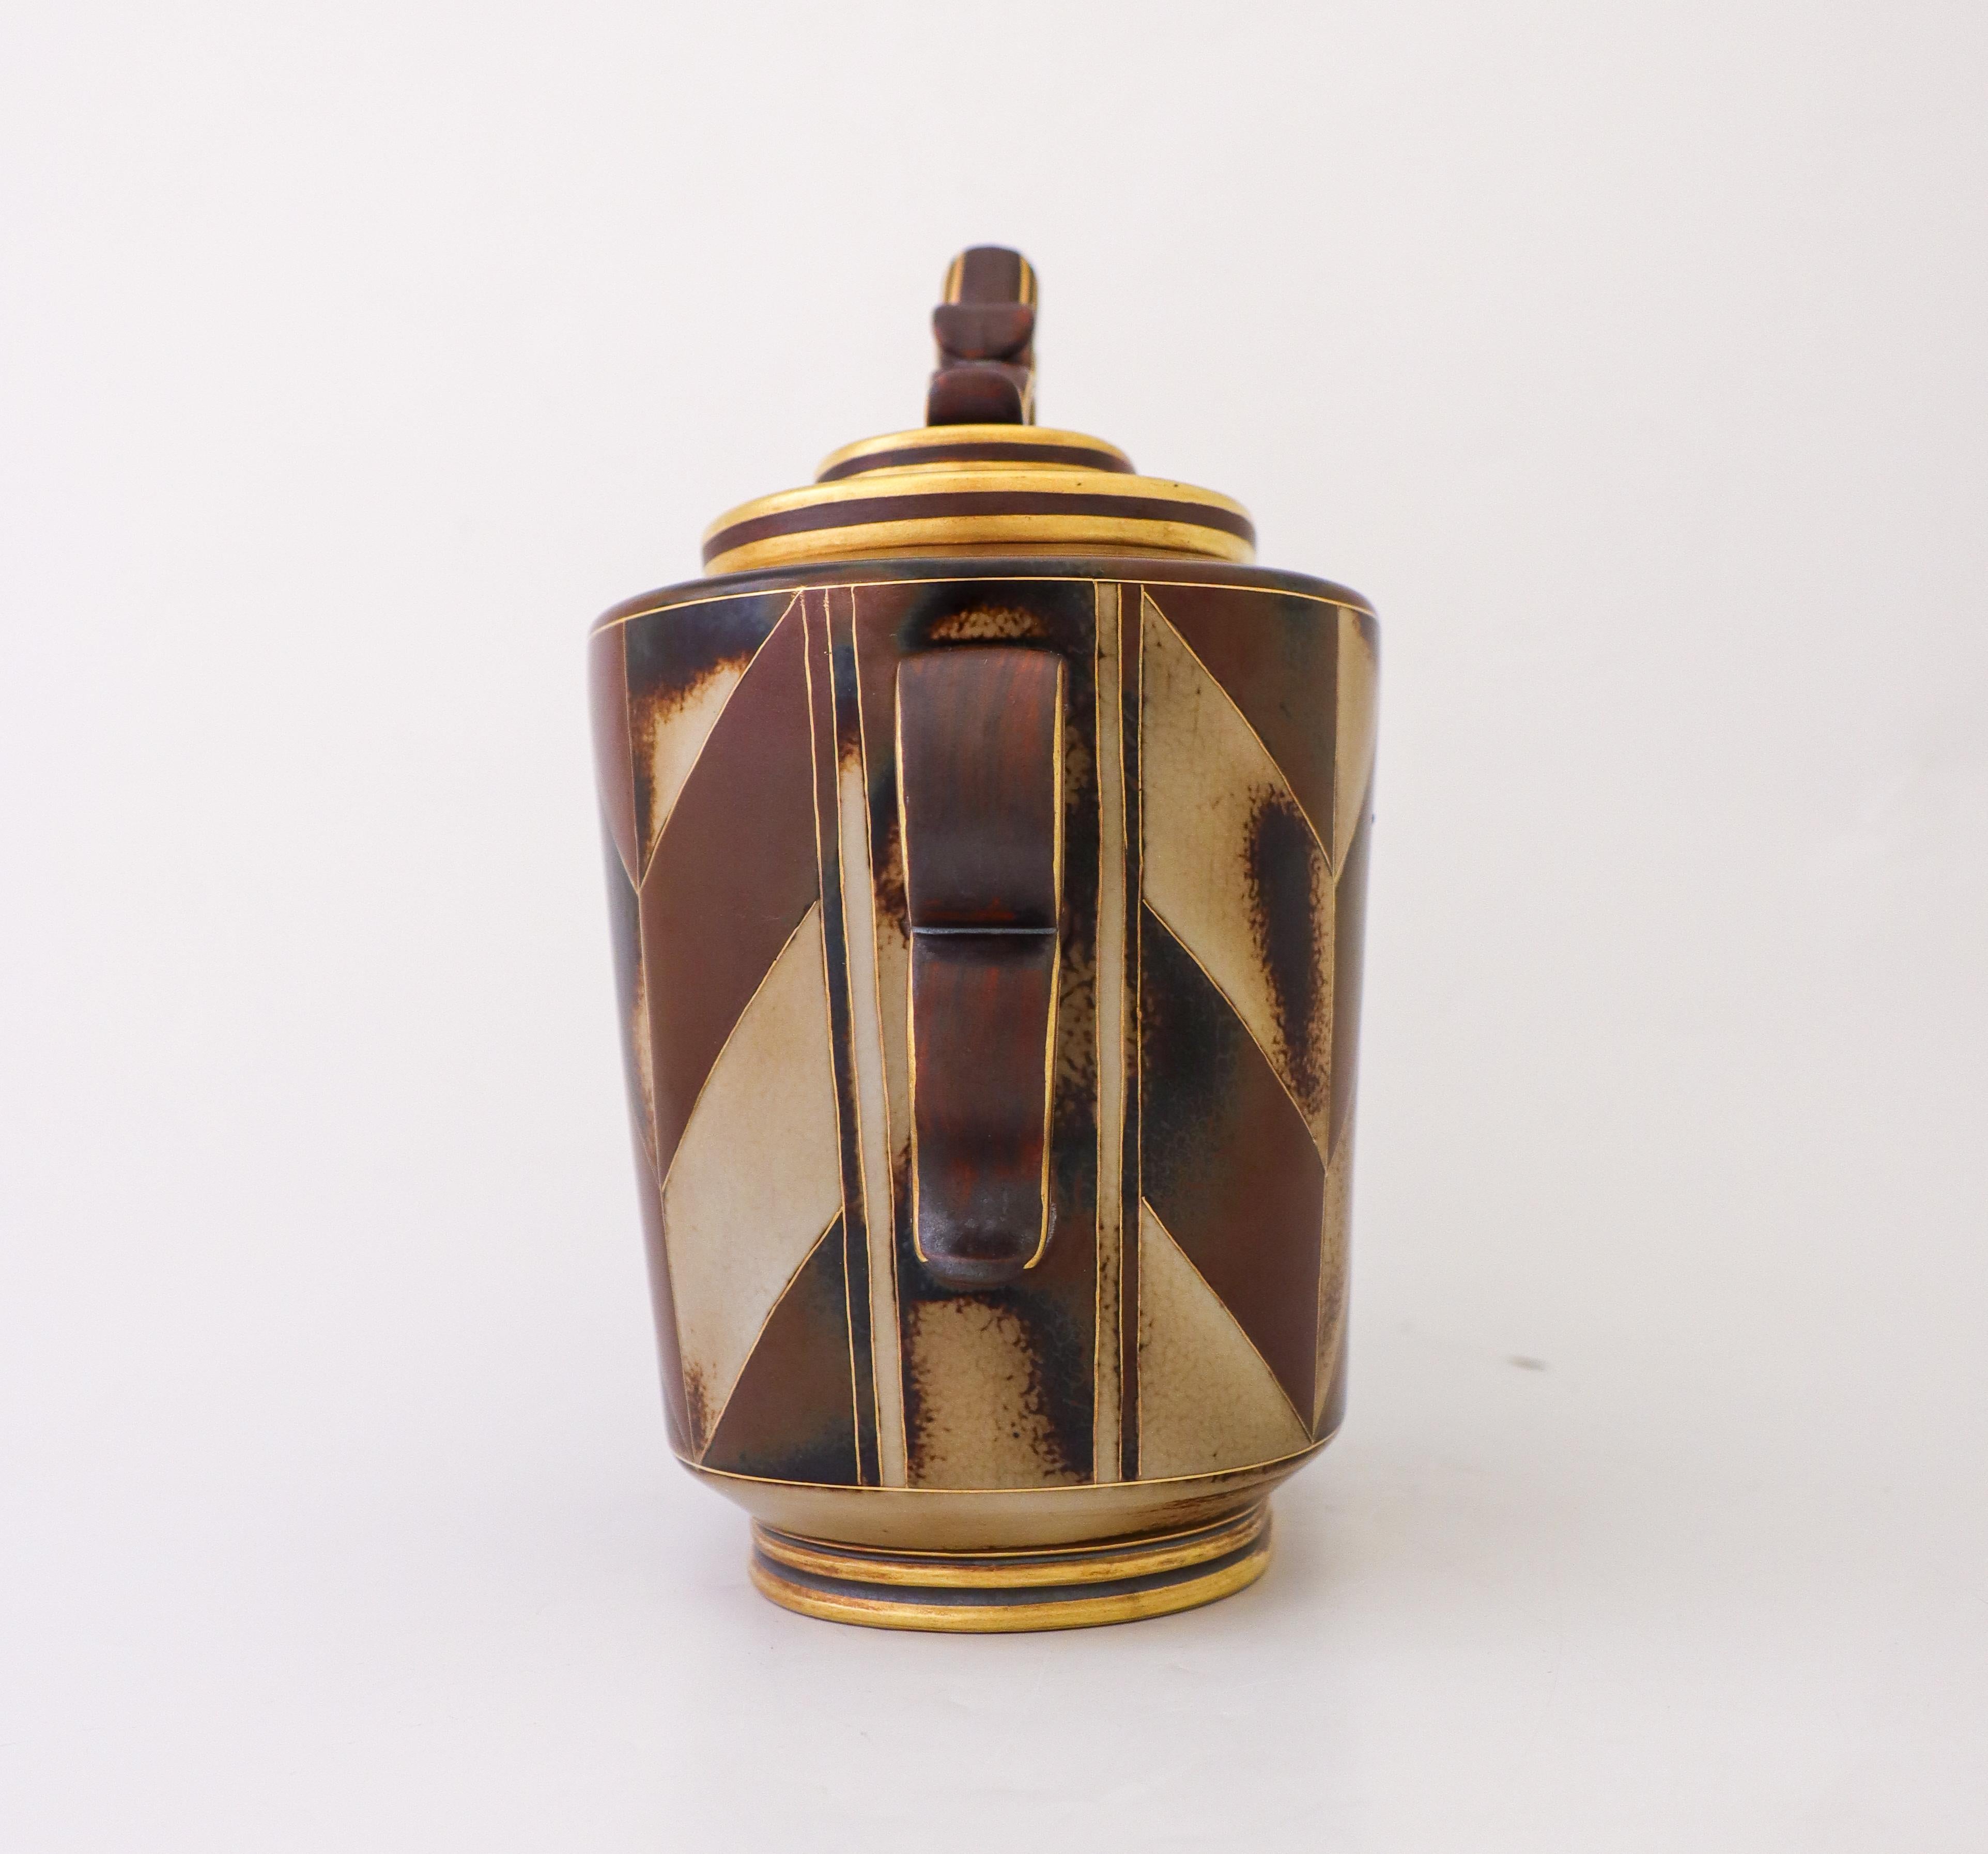 A ceramic urn designed by Gunnar Nylund at Rörstrand. It is 22.5 cm (9